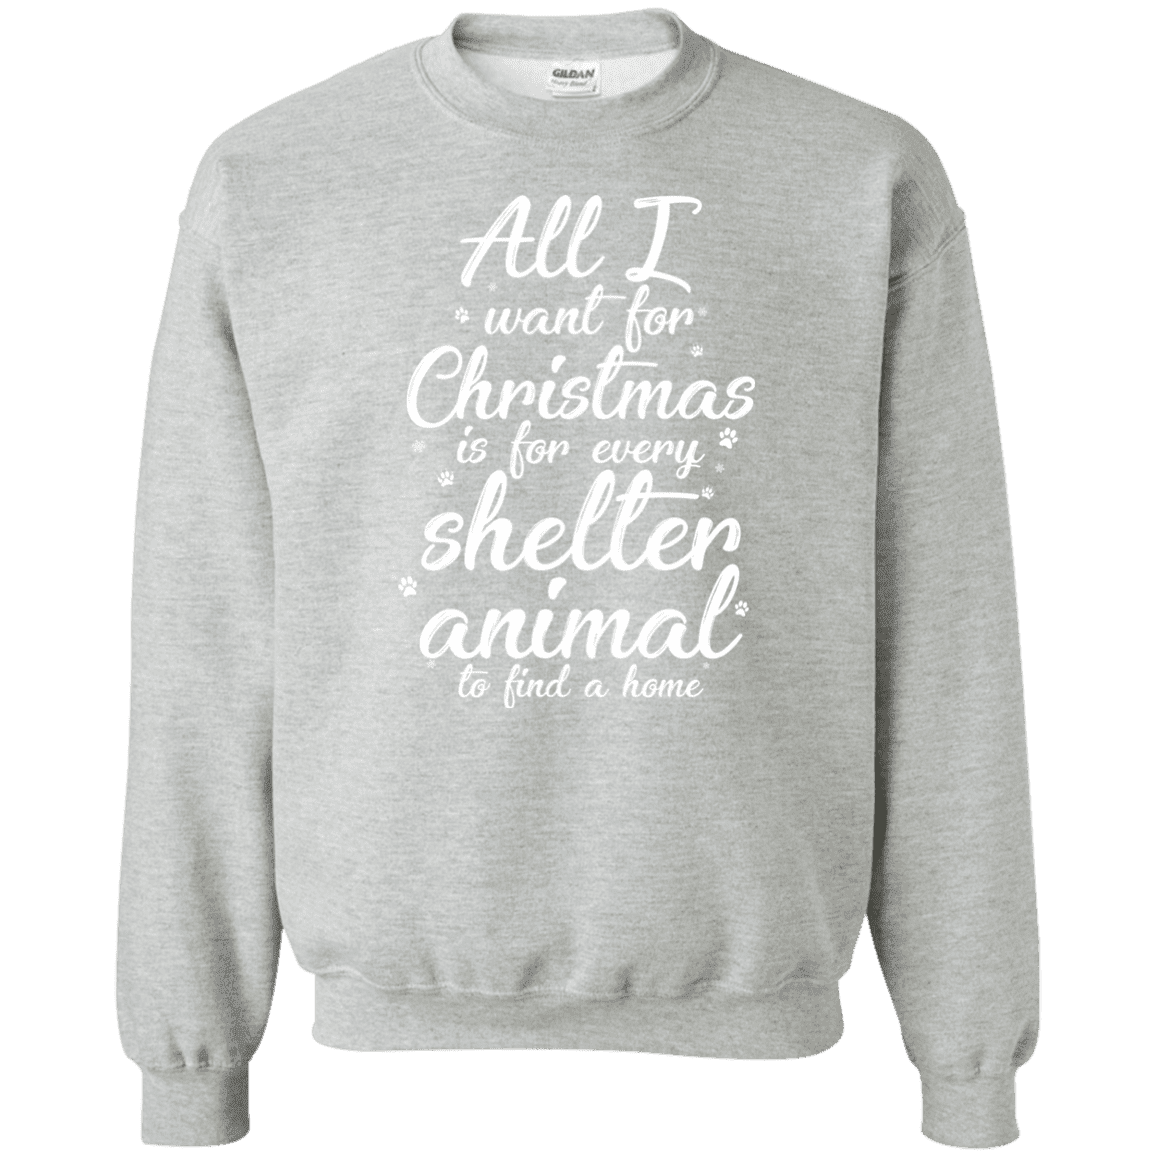 All I Want For Christmas - Sweatshirt.